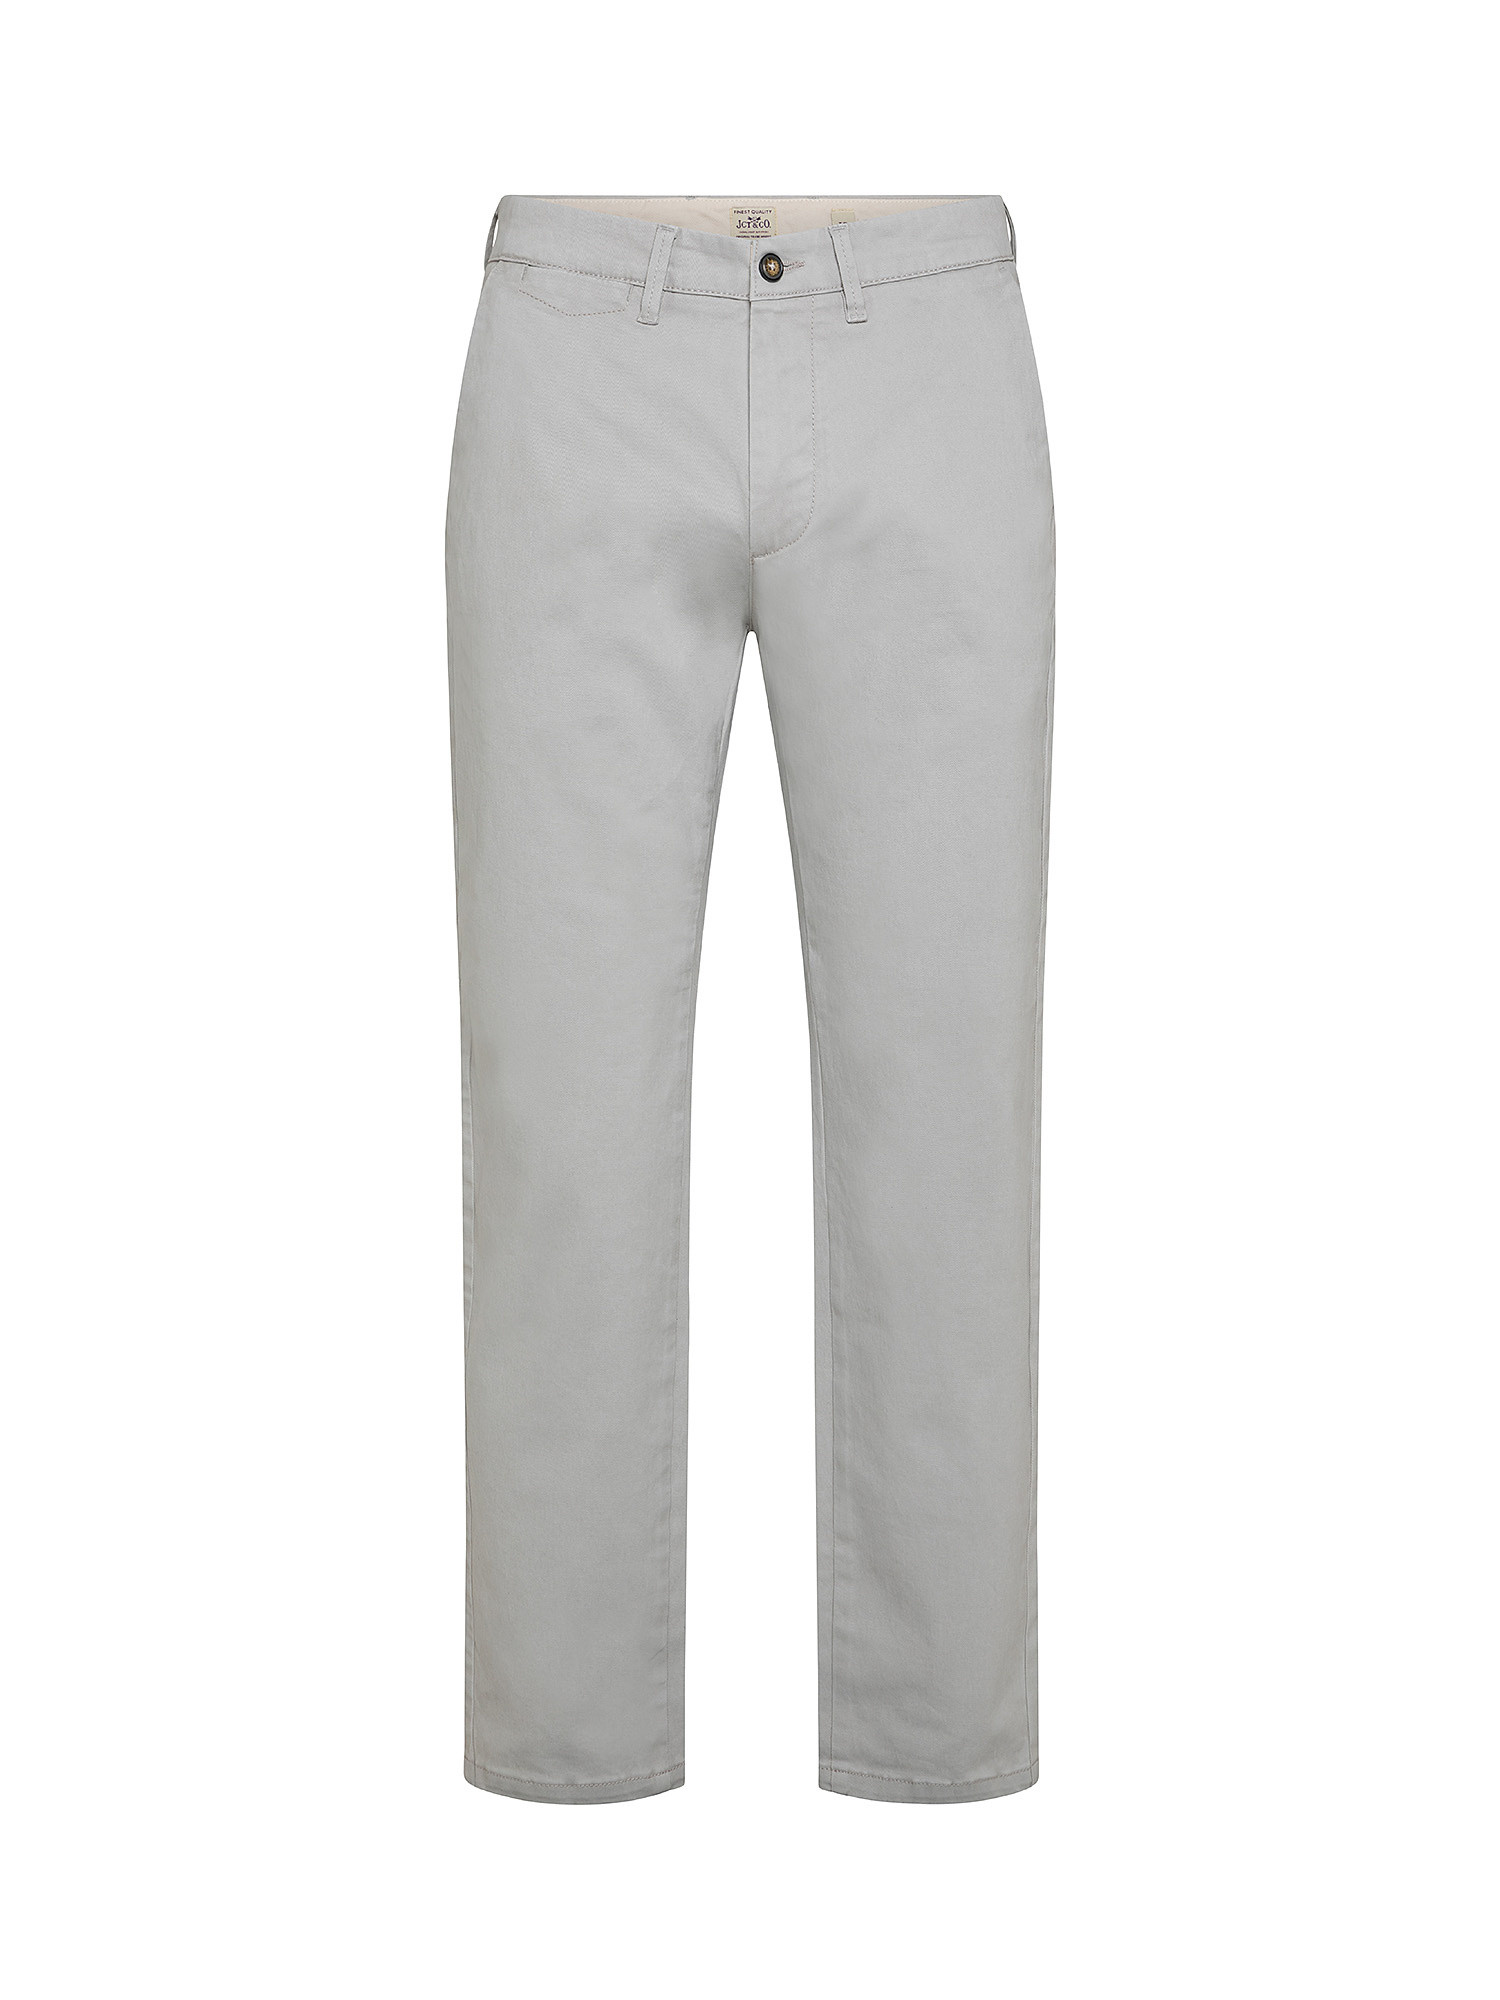 Pantalone chinos in cotone stretch, Grigio perla, large image number 0